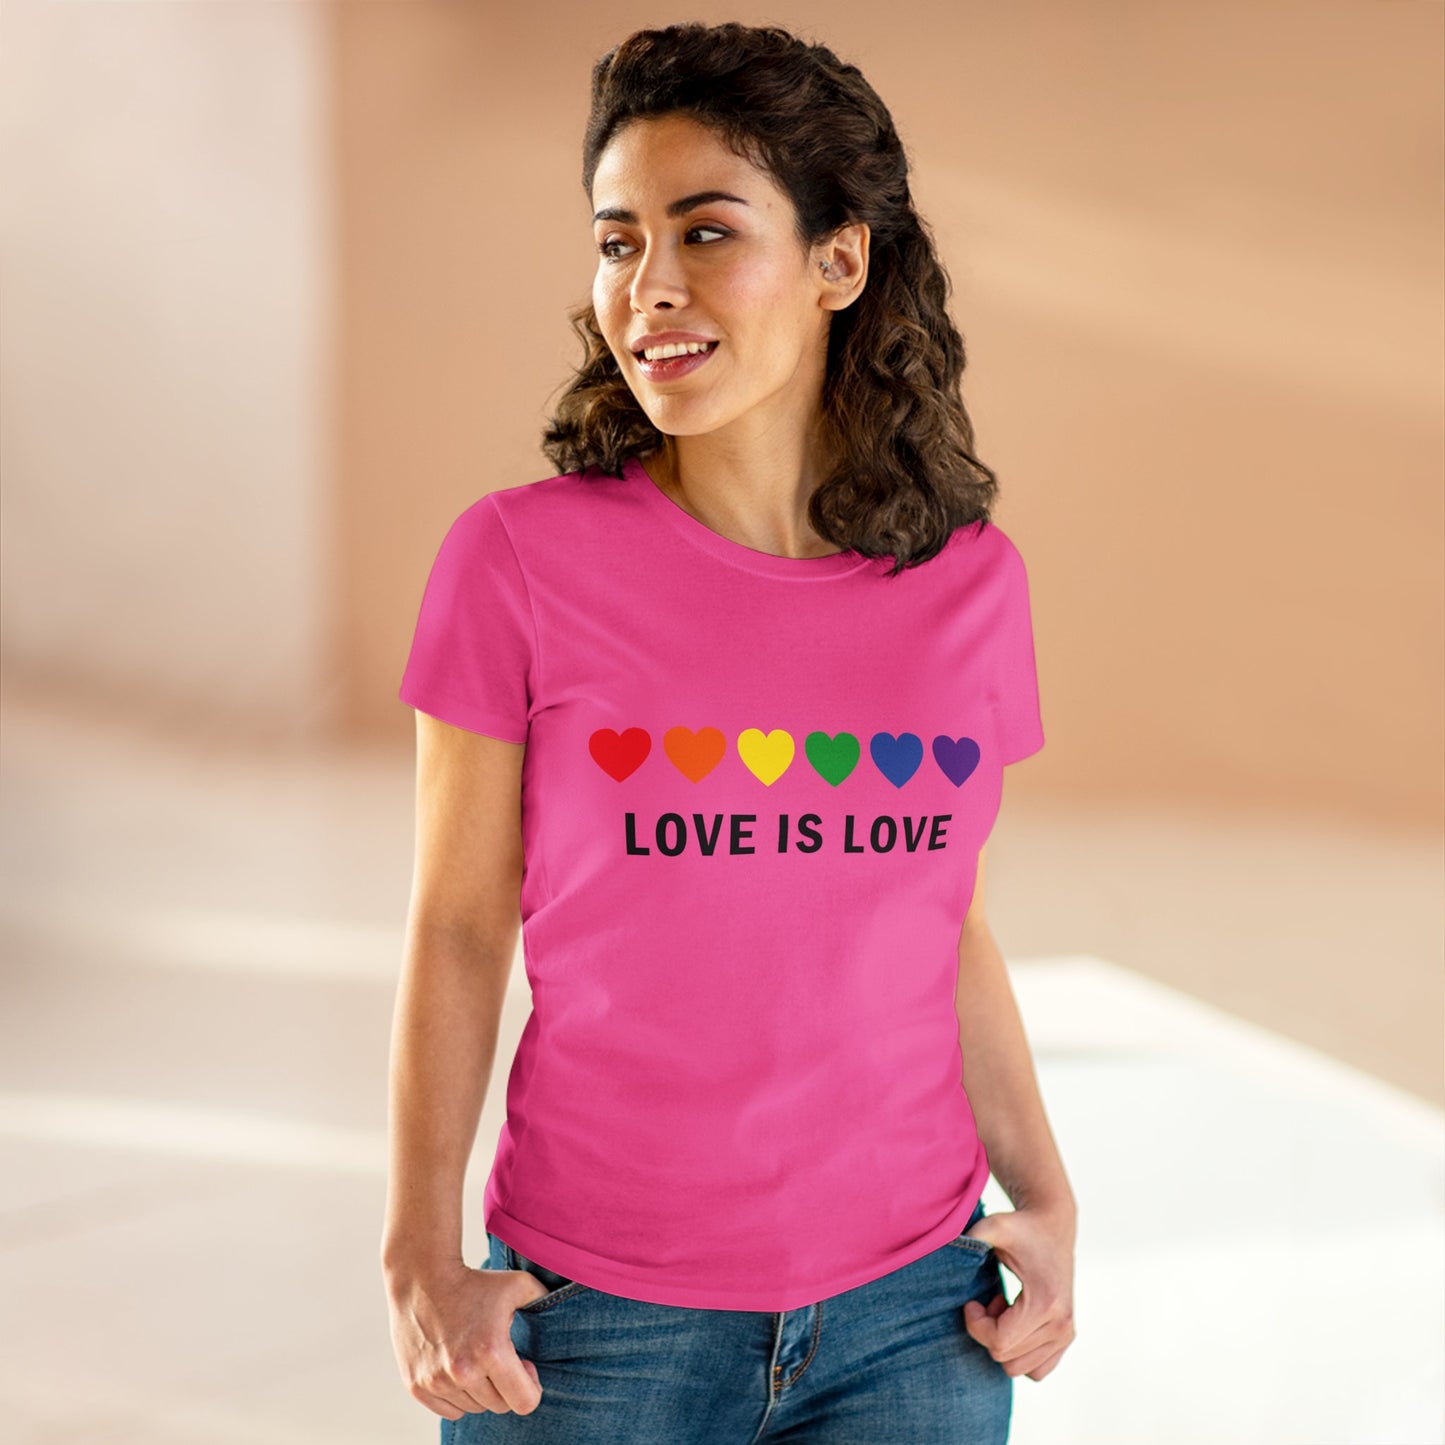 love is love shirt 8